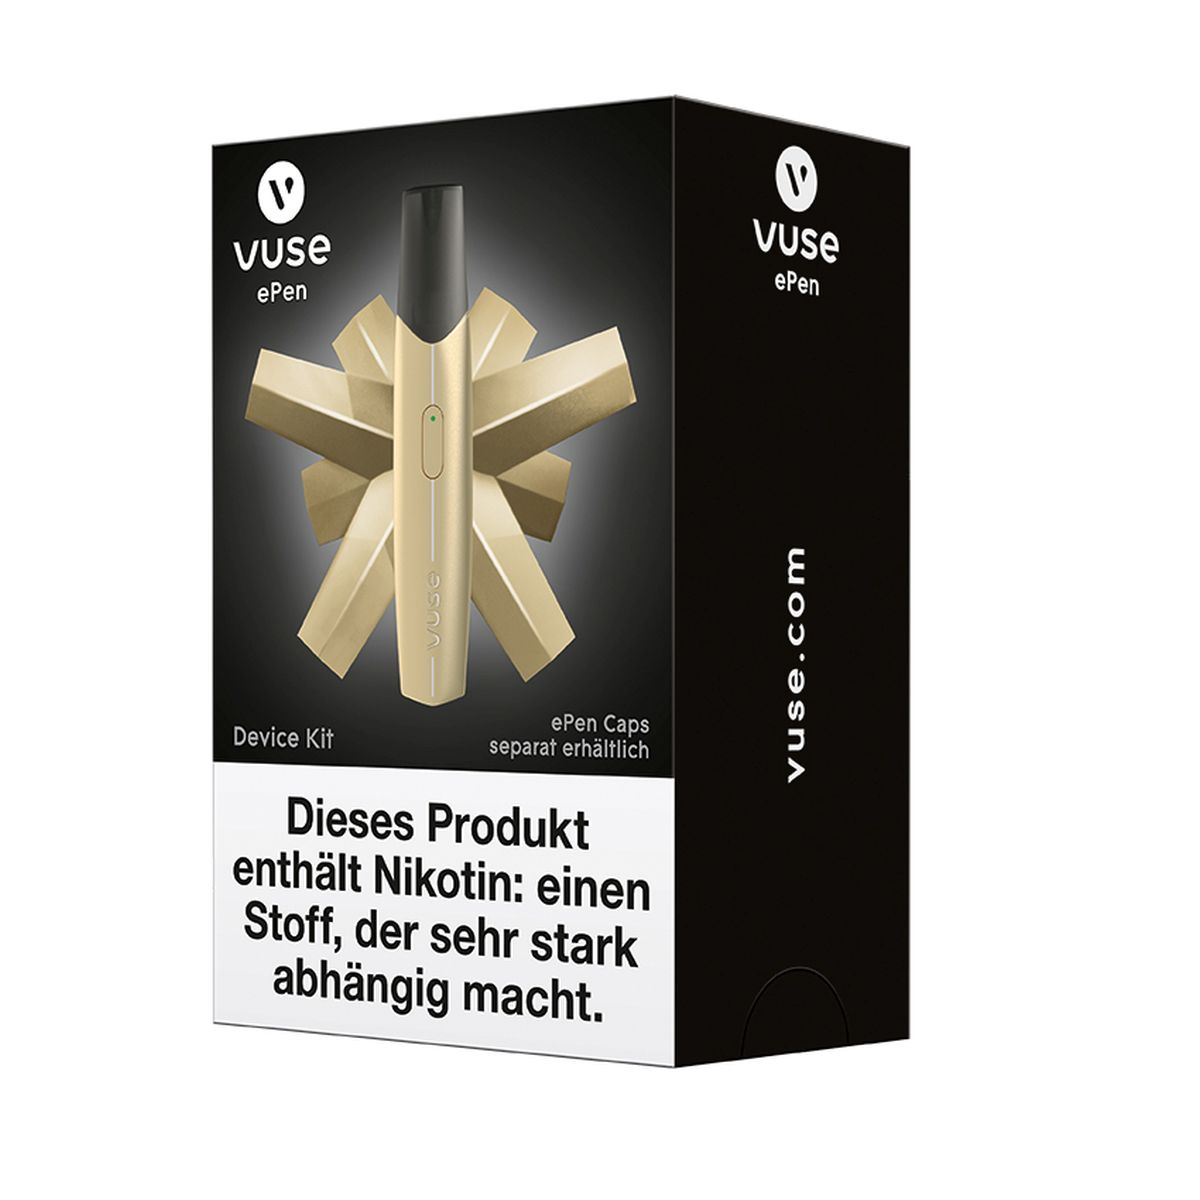 Vuse Vuse ePen Device Kit gold (incl. USB-Kabel) bei www.Tabakring.de kaufen